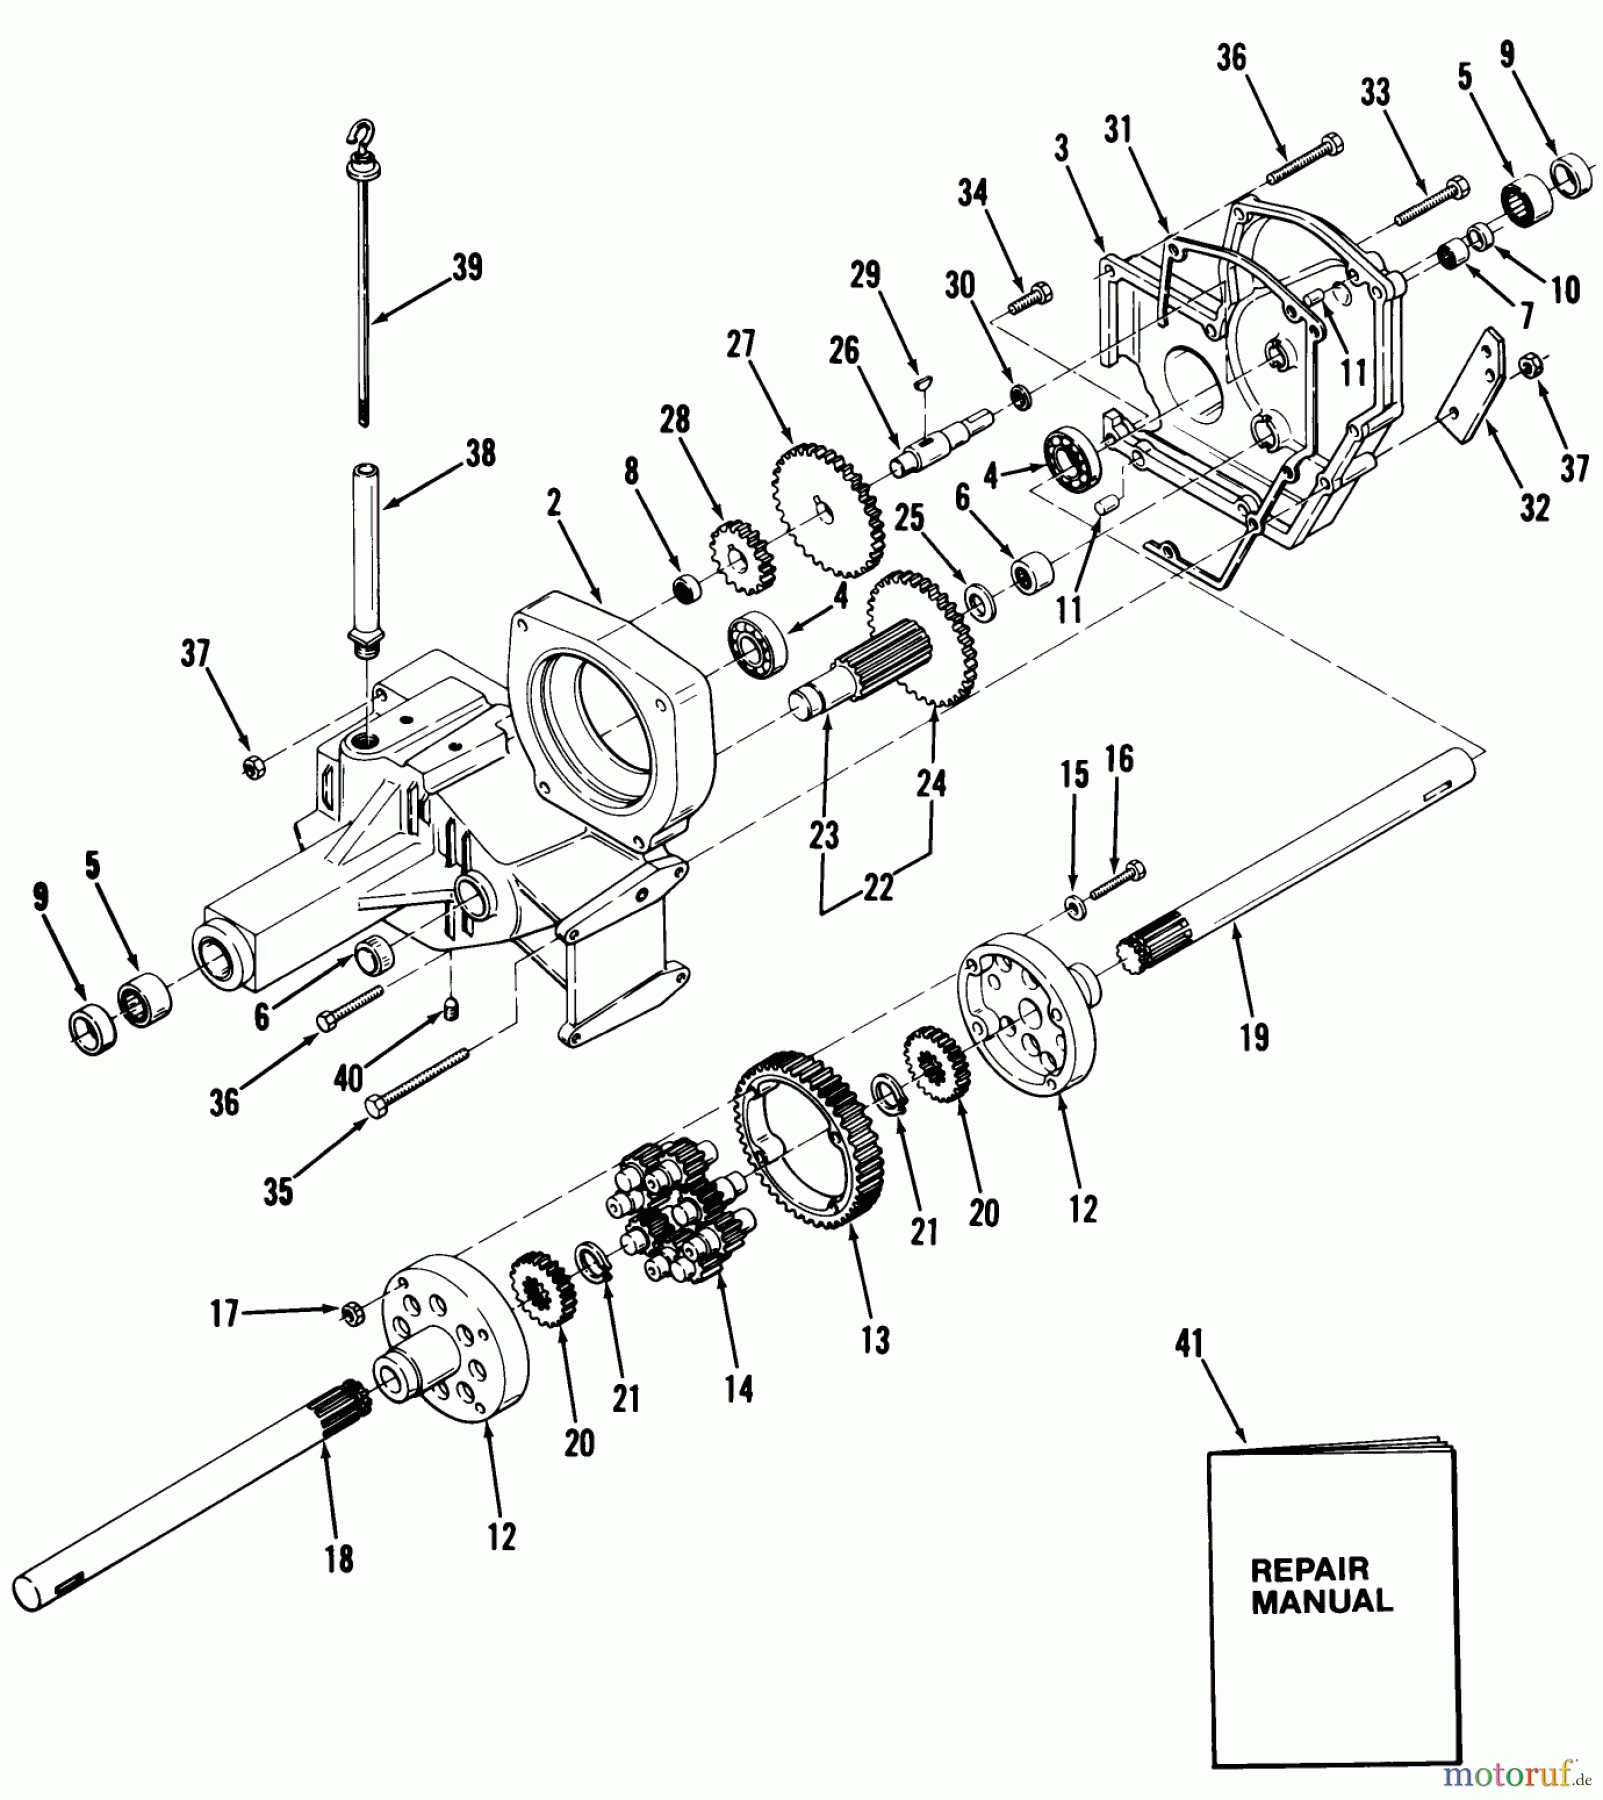  Toro Neu Mowers, Lawn & Garden Tractor Seite 1 01-14KE03 (C-145) - Toro C-145 Automatic Tractor, 1982 TRANSAXLE